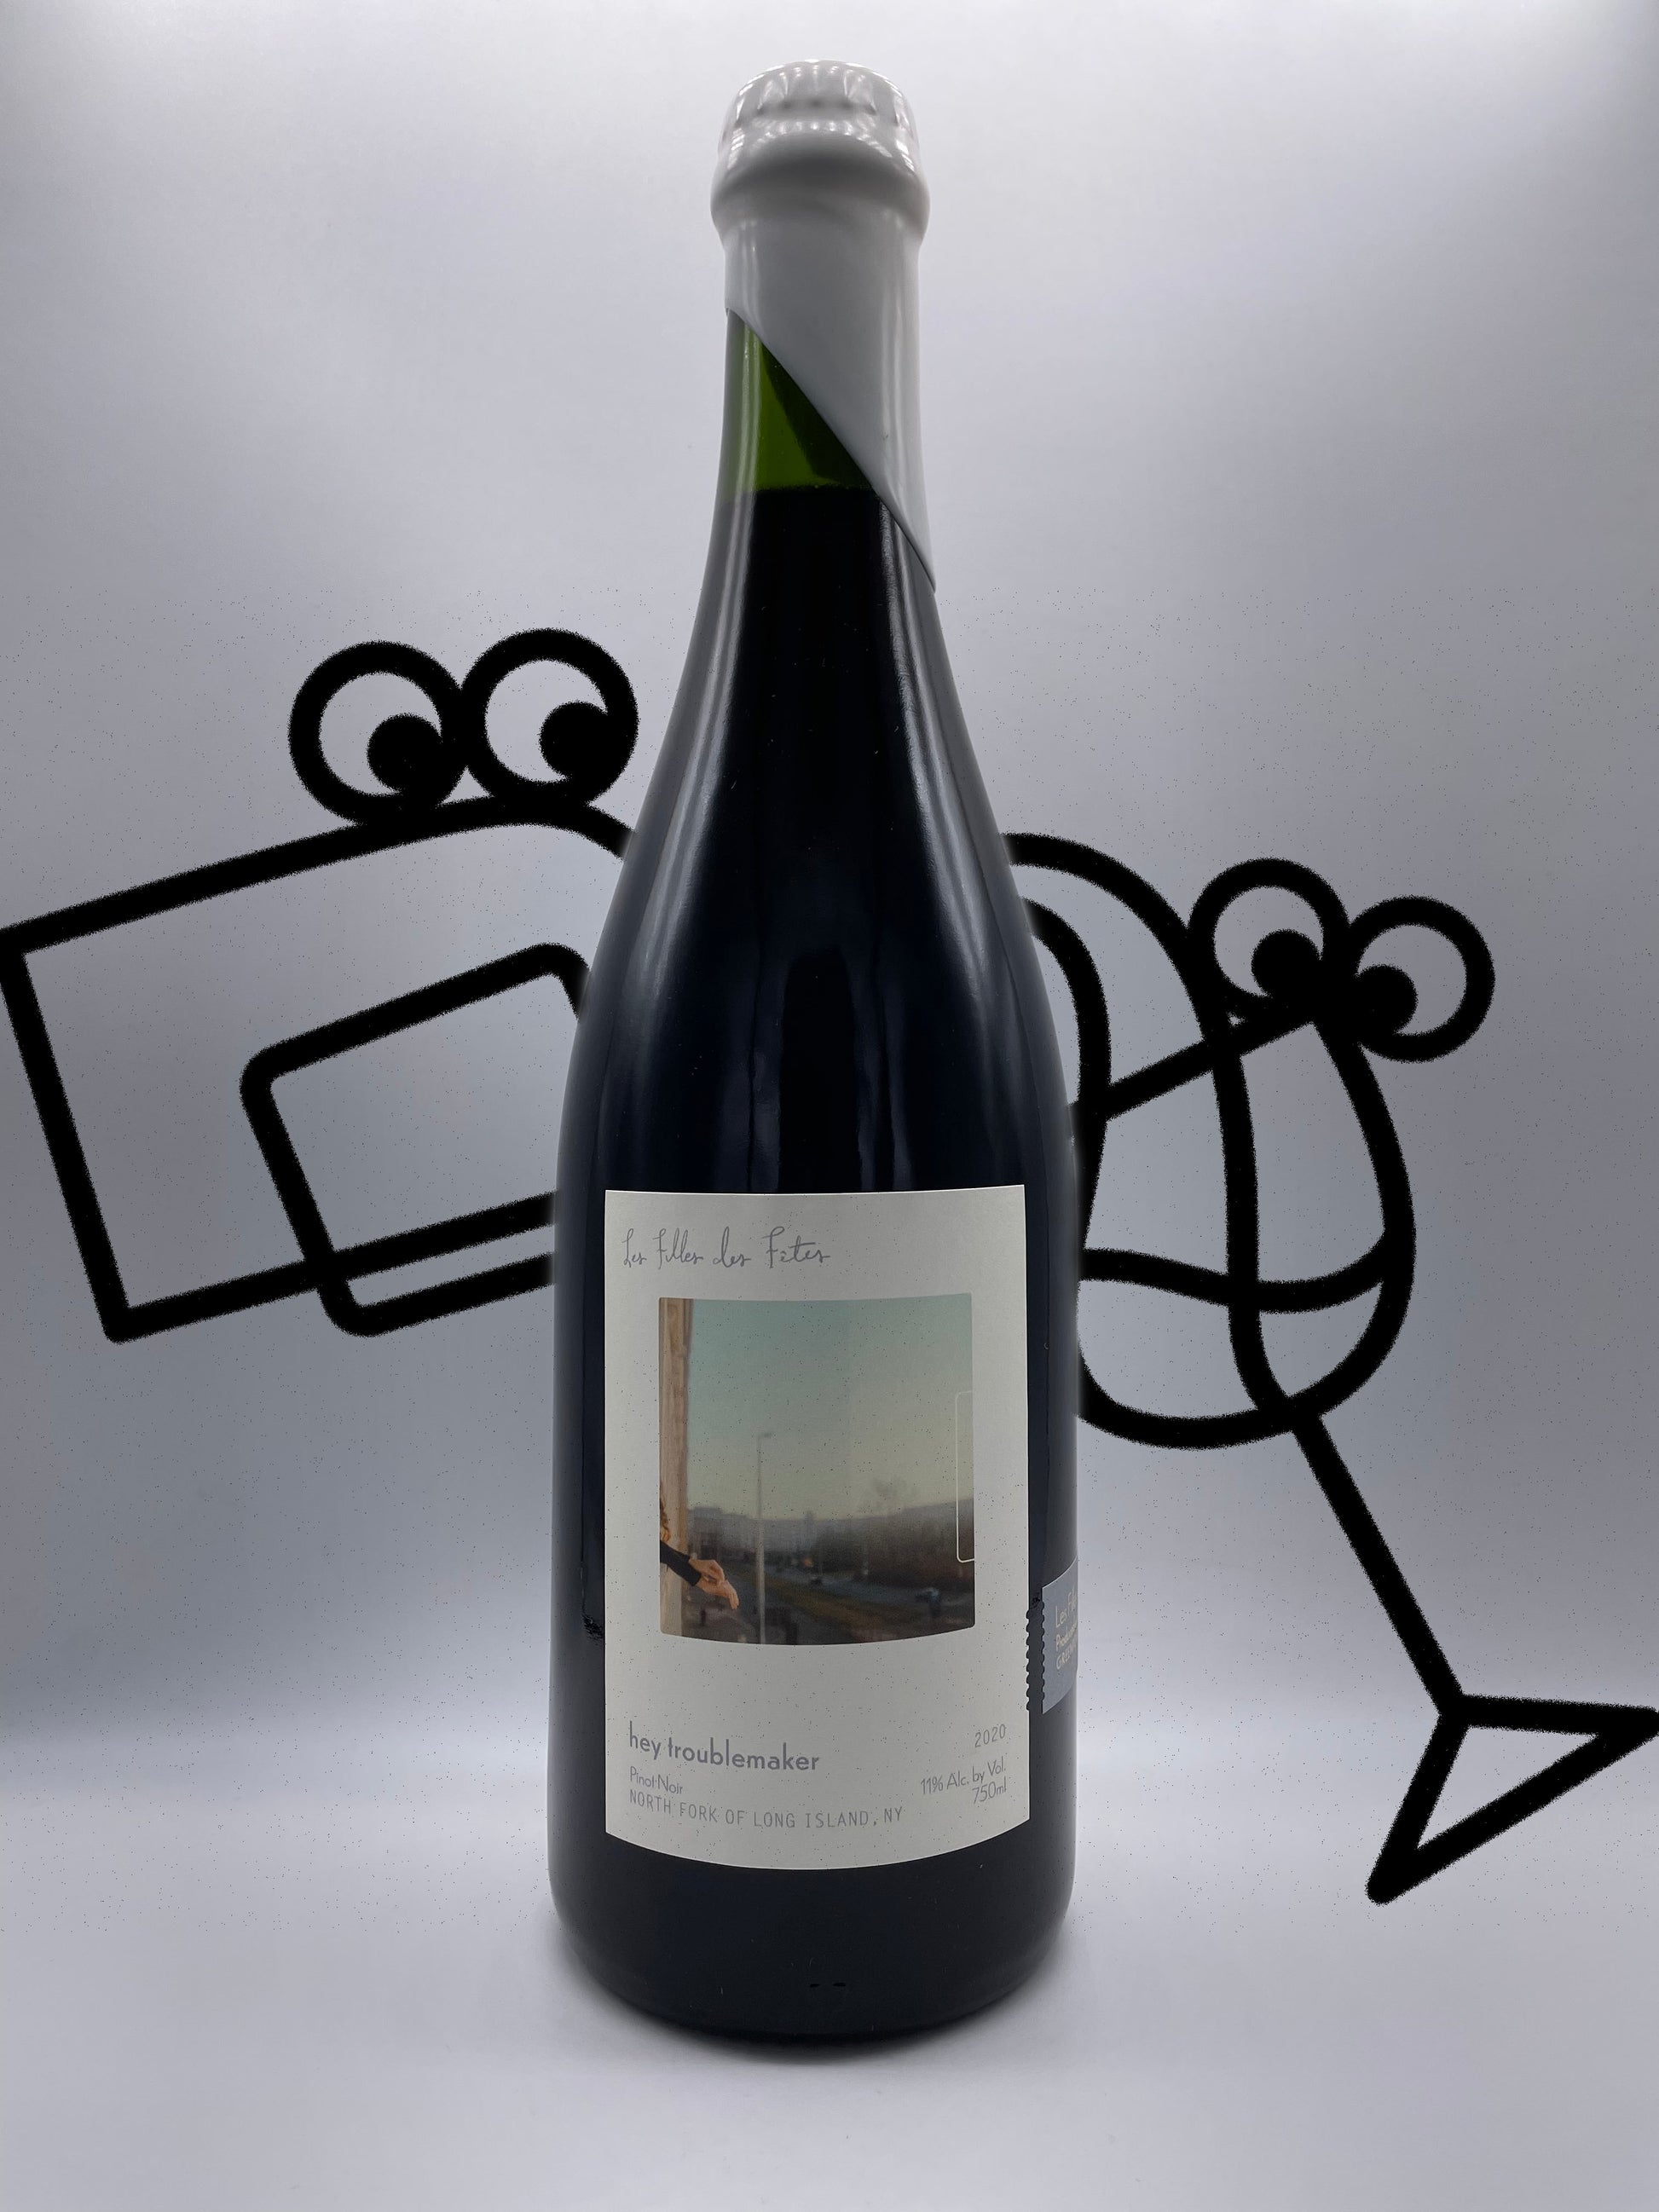 Matchbook Distilling 'Hey Troublemaker' Pinot Noir 750ml Williston Park Wines 